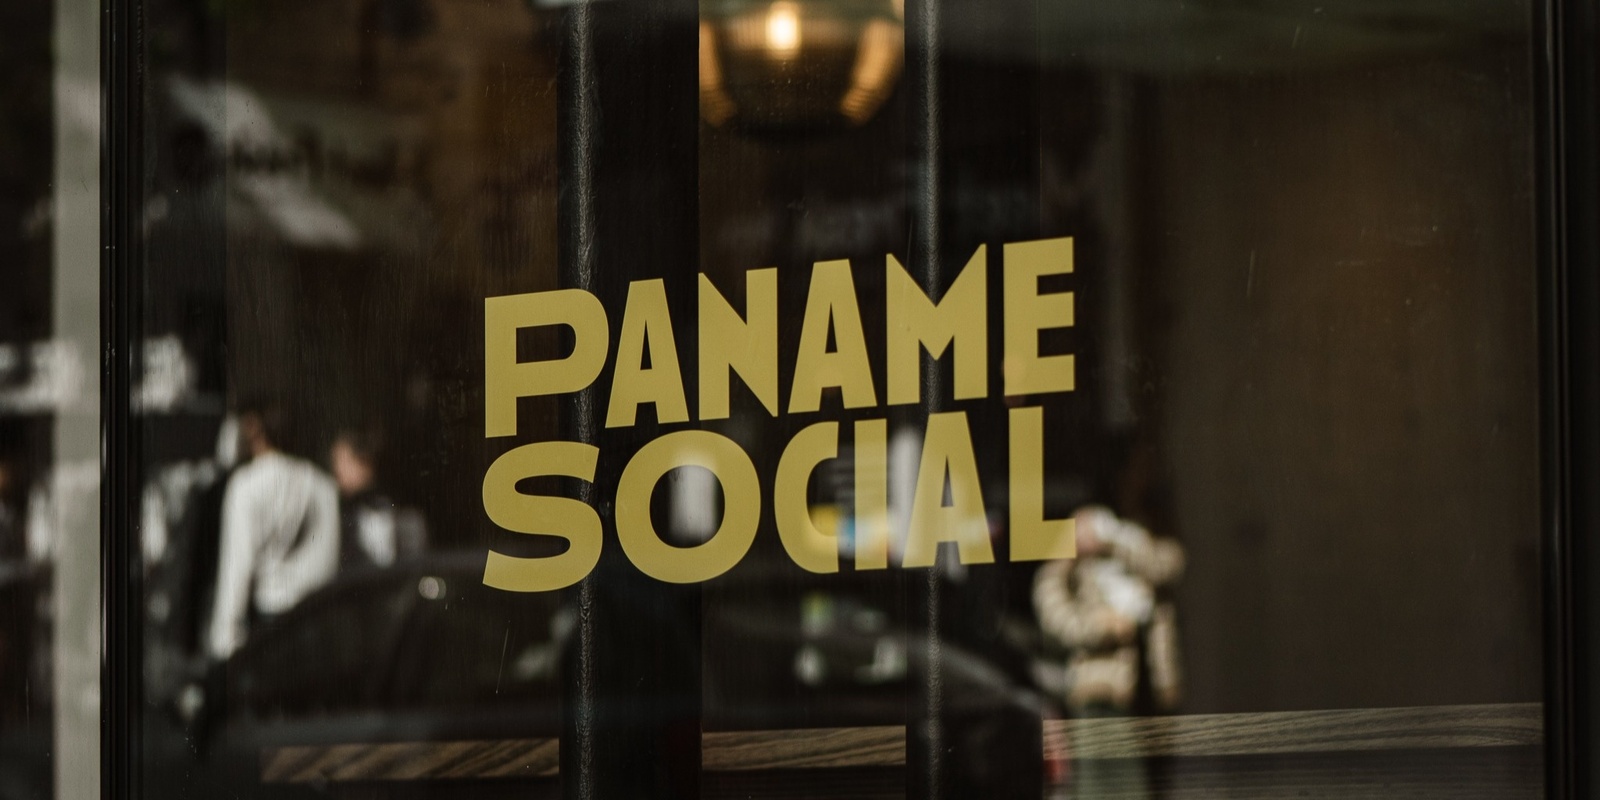 Paname Social's banner